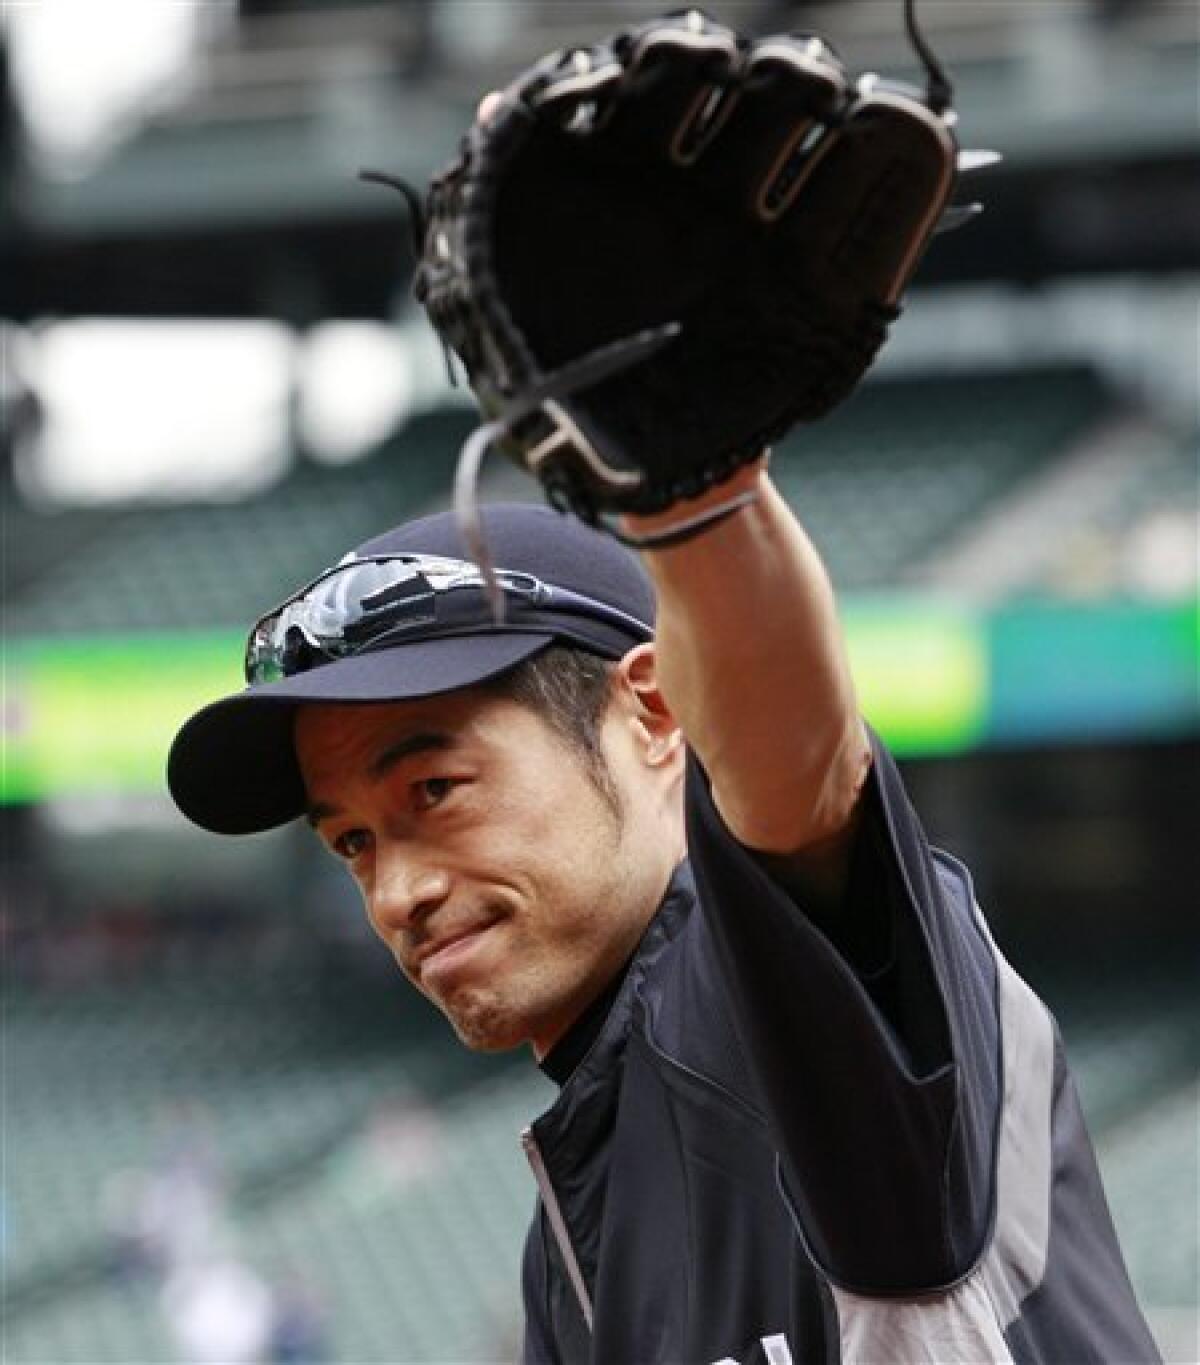 Seattle Mariners' Ichiro Suzuki holds his bat as he stands in the